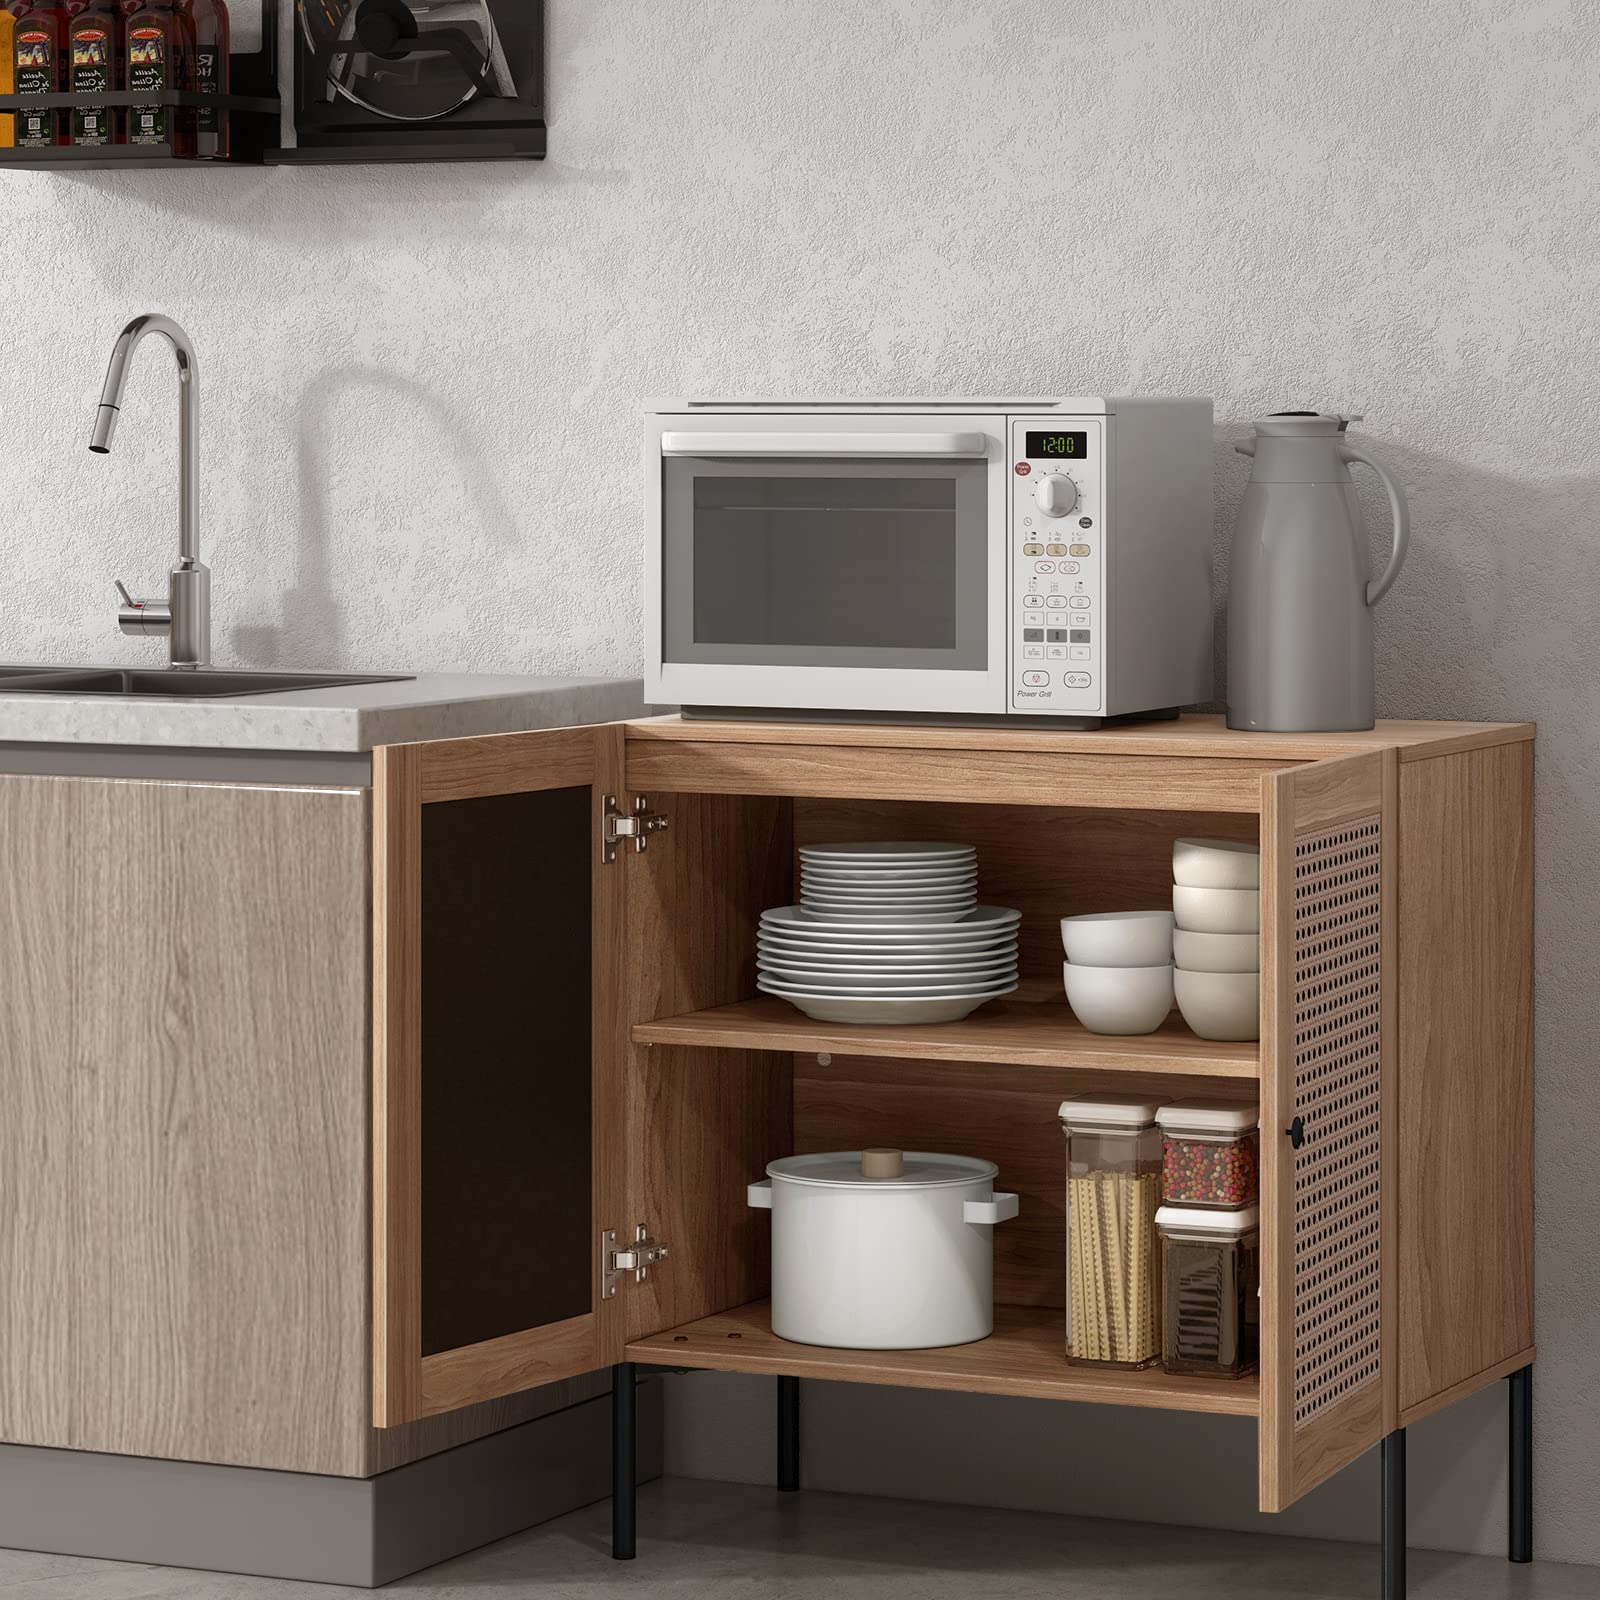 Giantex Buffet Cabinet, Wood Sideboard Storage Cabinet with Rattan Door, 3-Position Adjustable Shelf